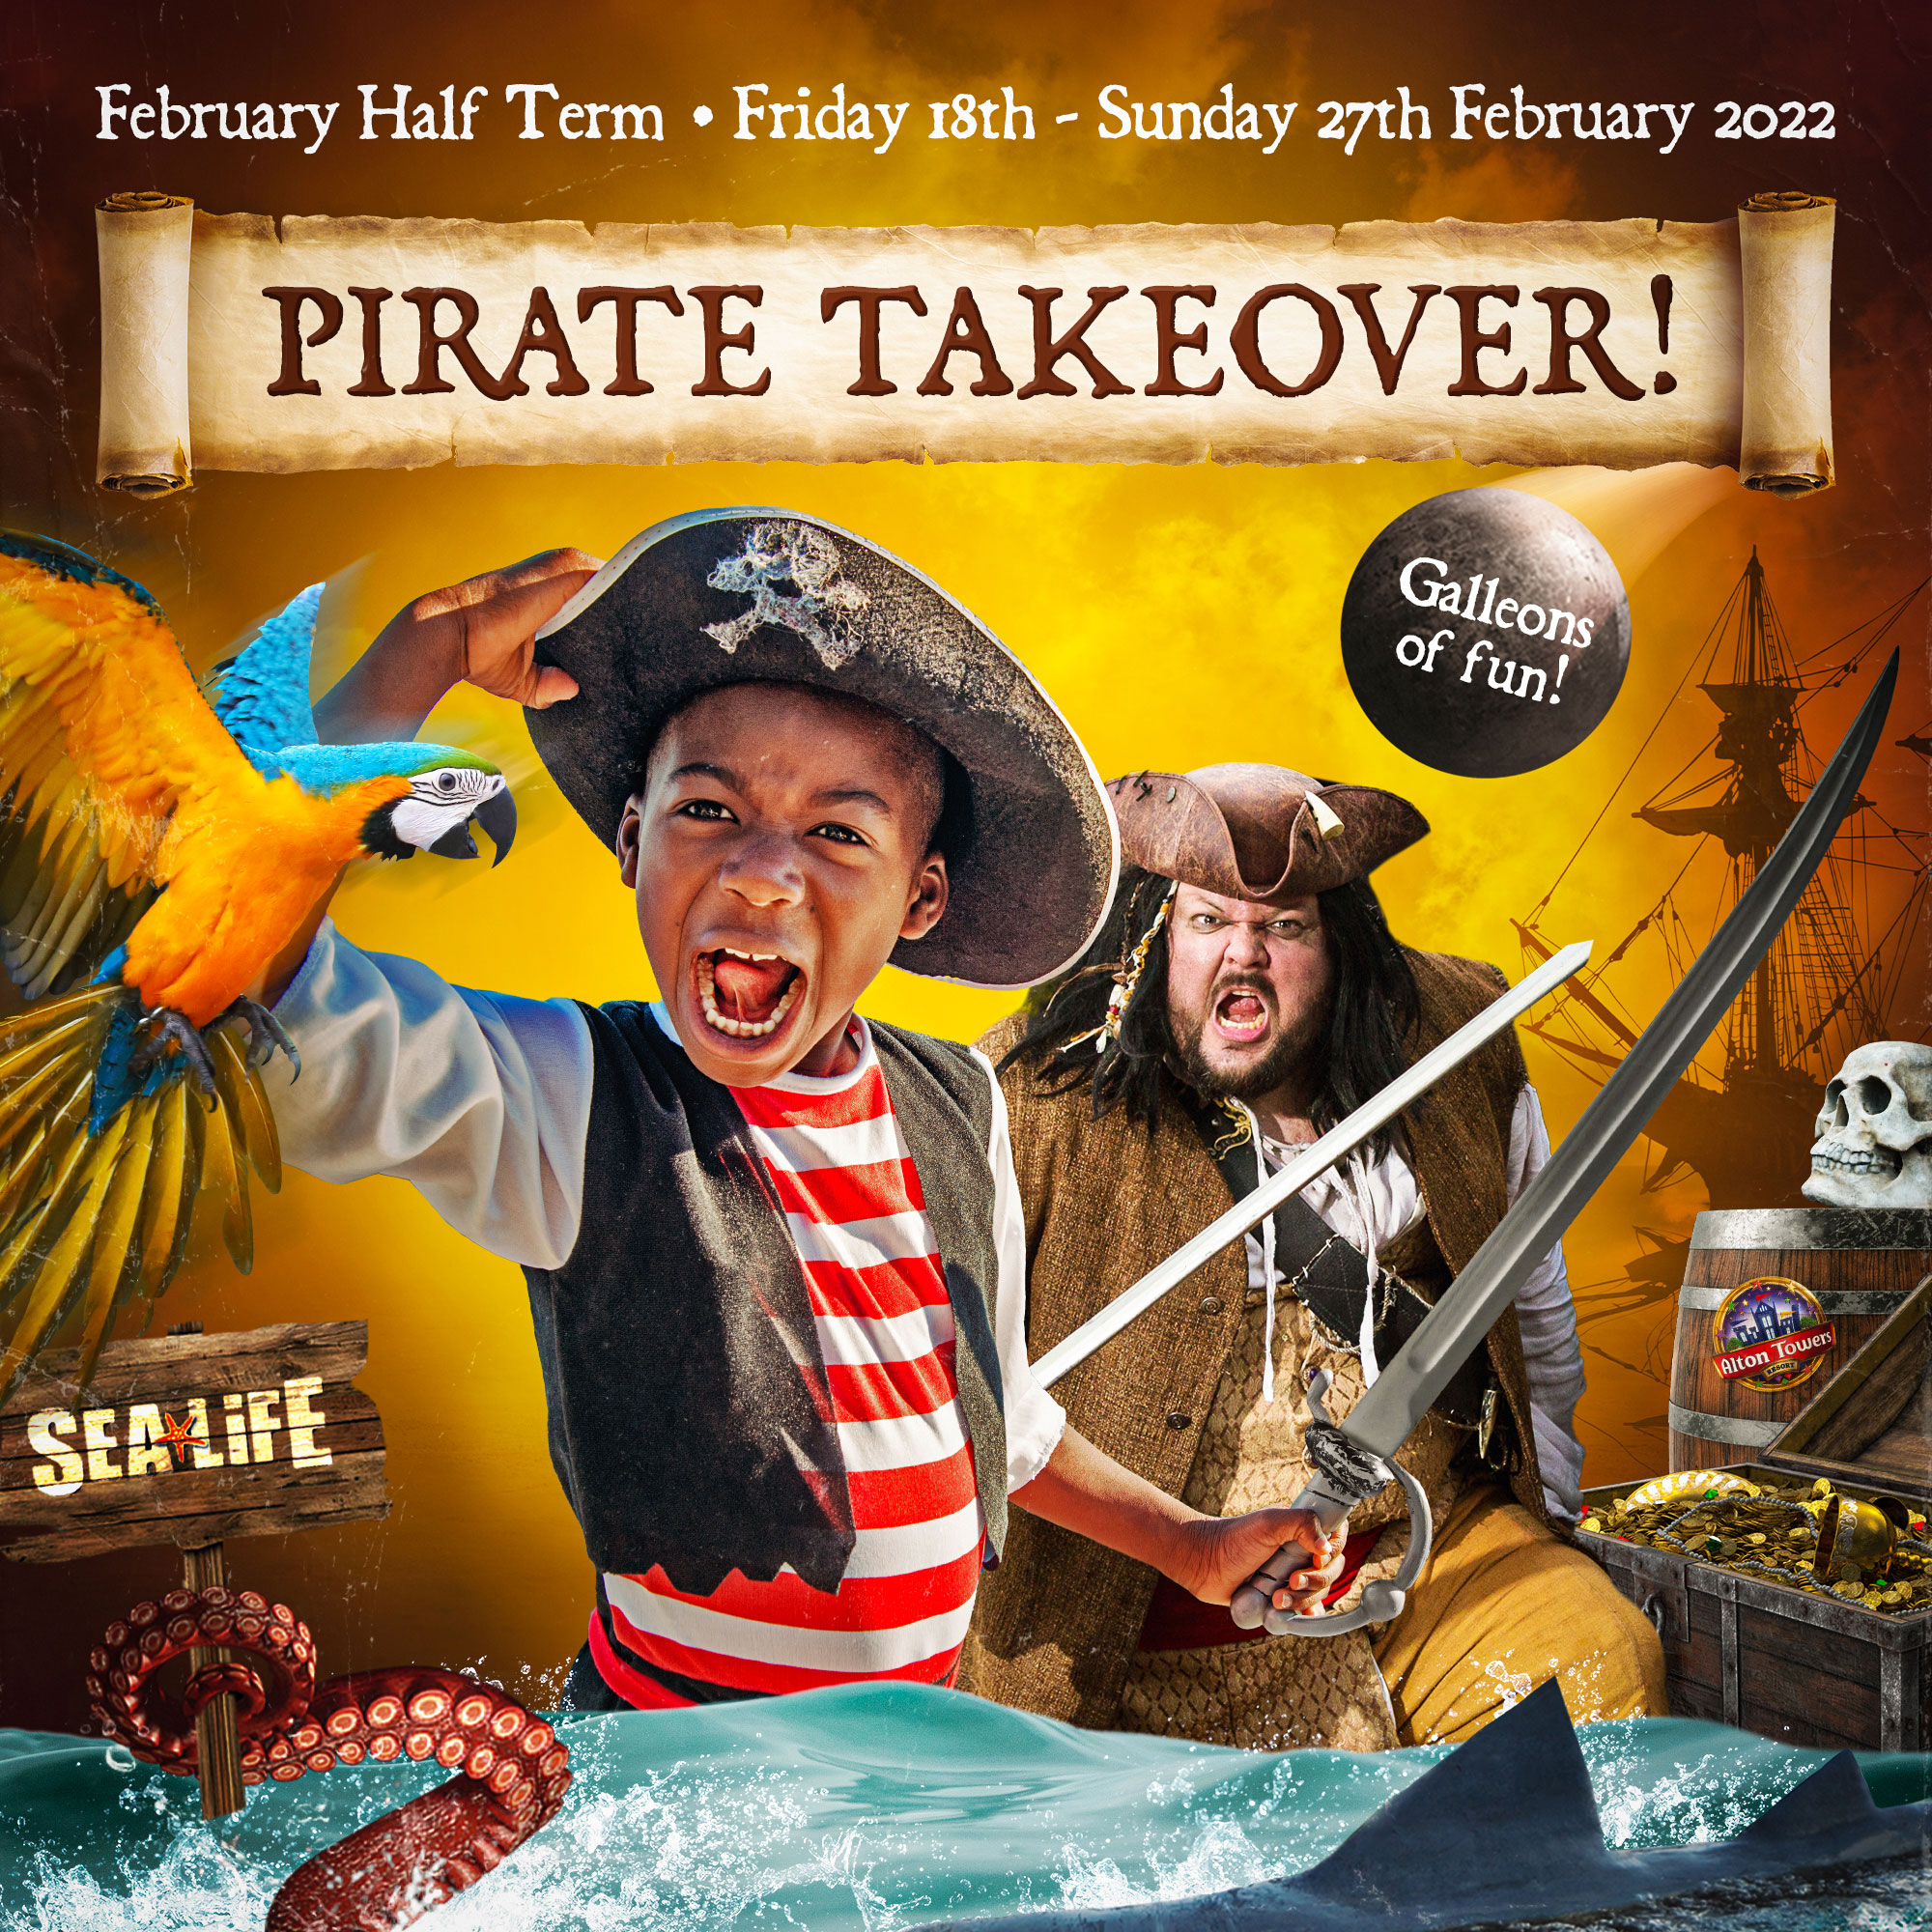 February Half Term Pirate Takeover